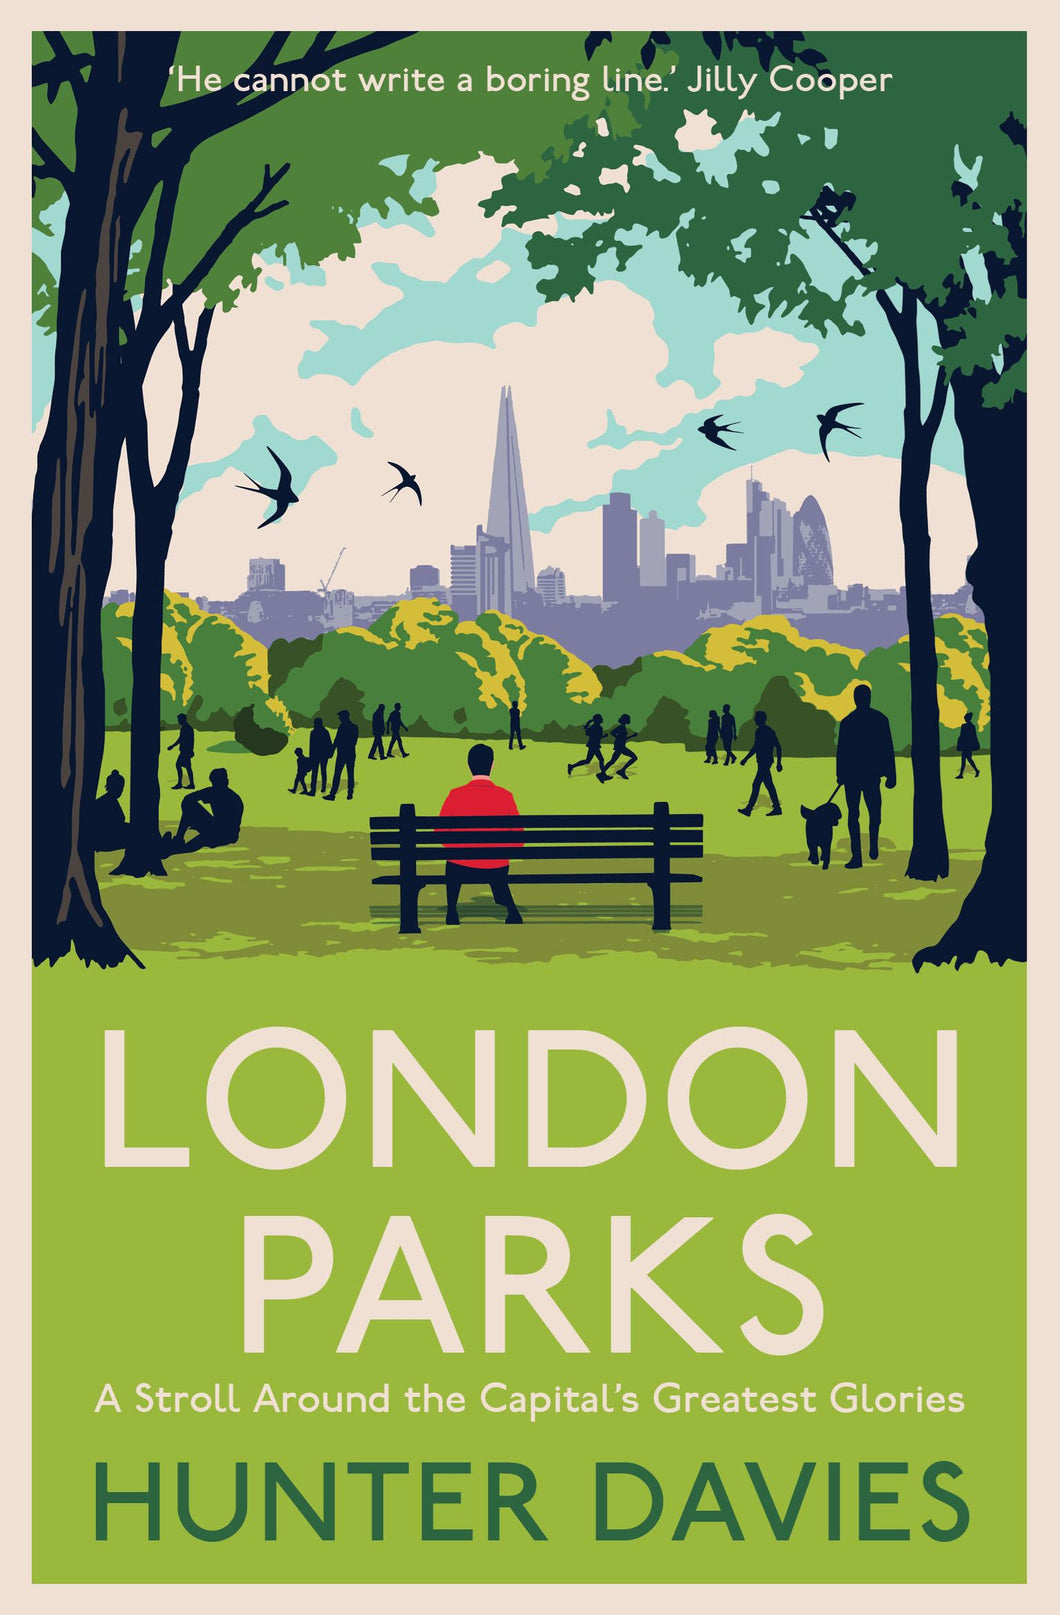 London Parks by Hunter Davies